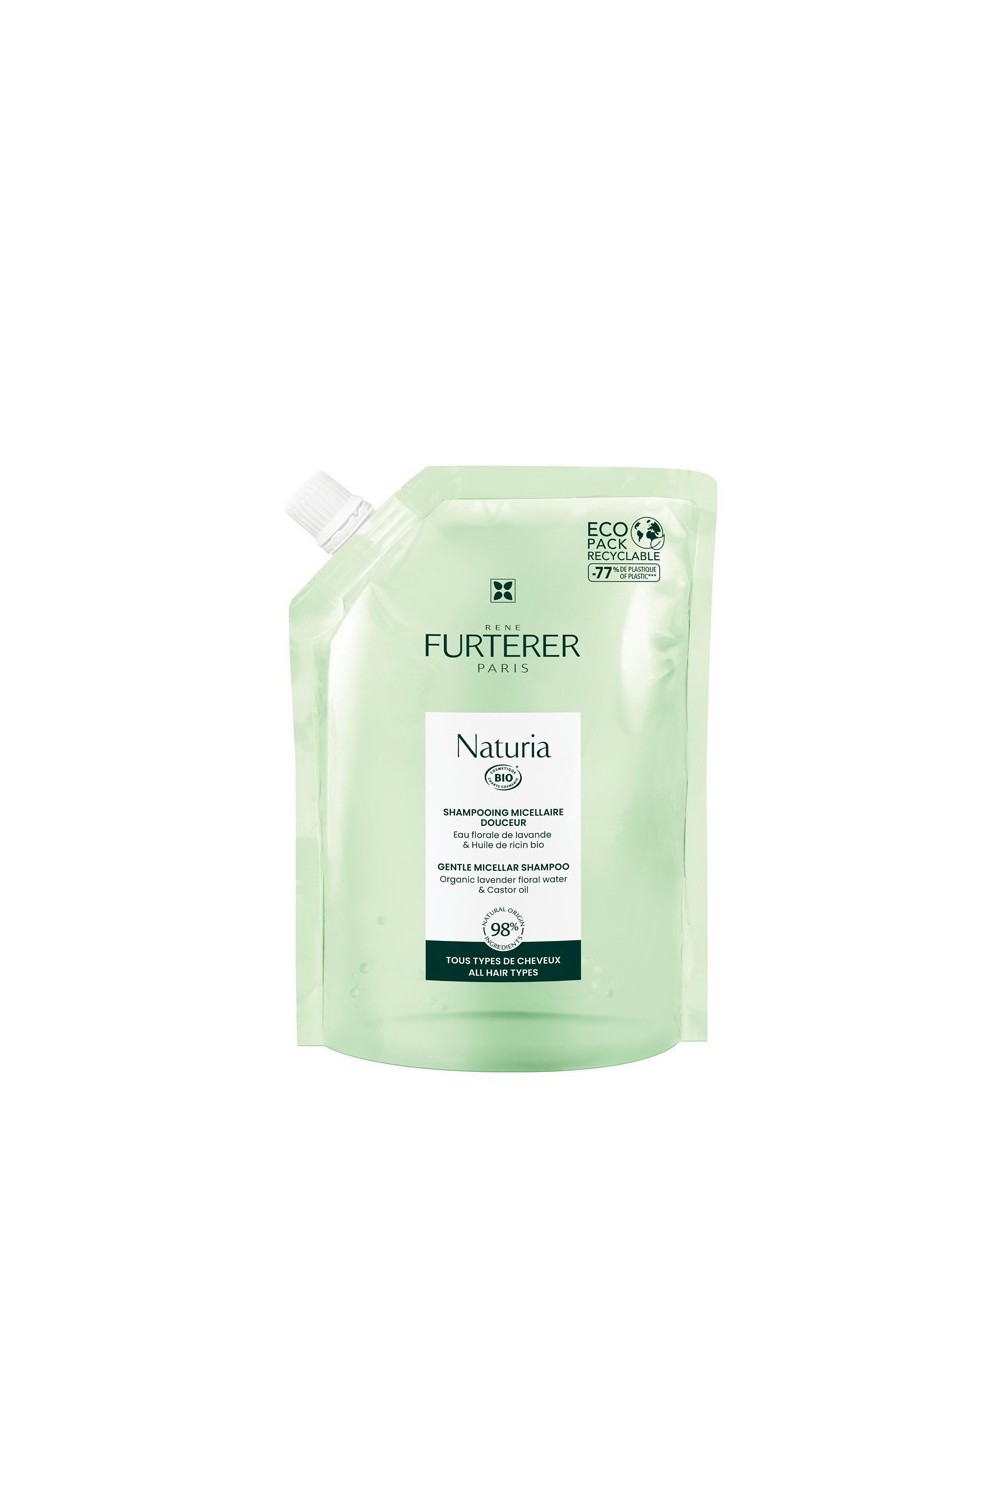 Rene Furterer Naturia Gentle Micellar Shampoo Eco Refill 400ml